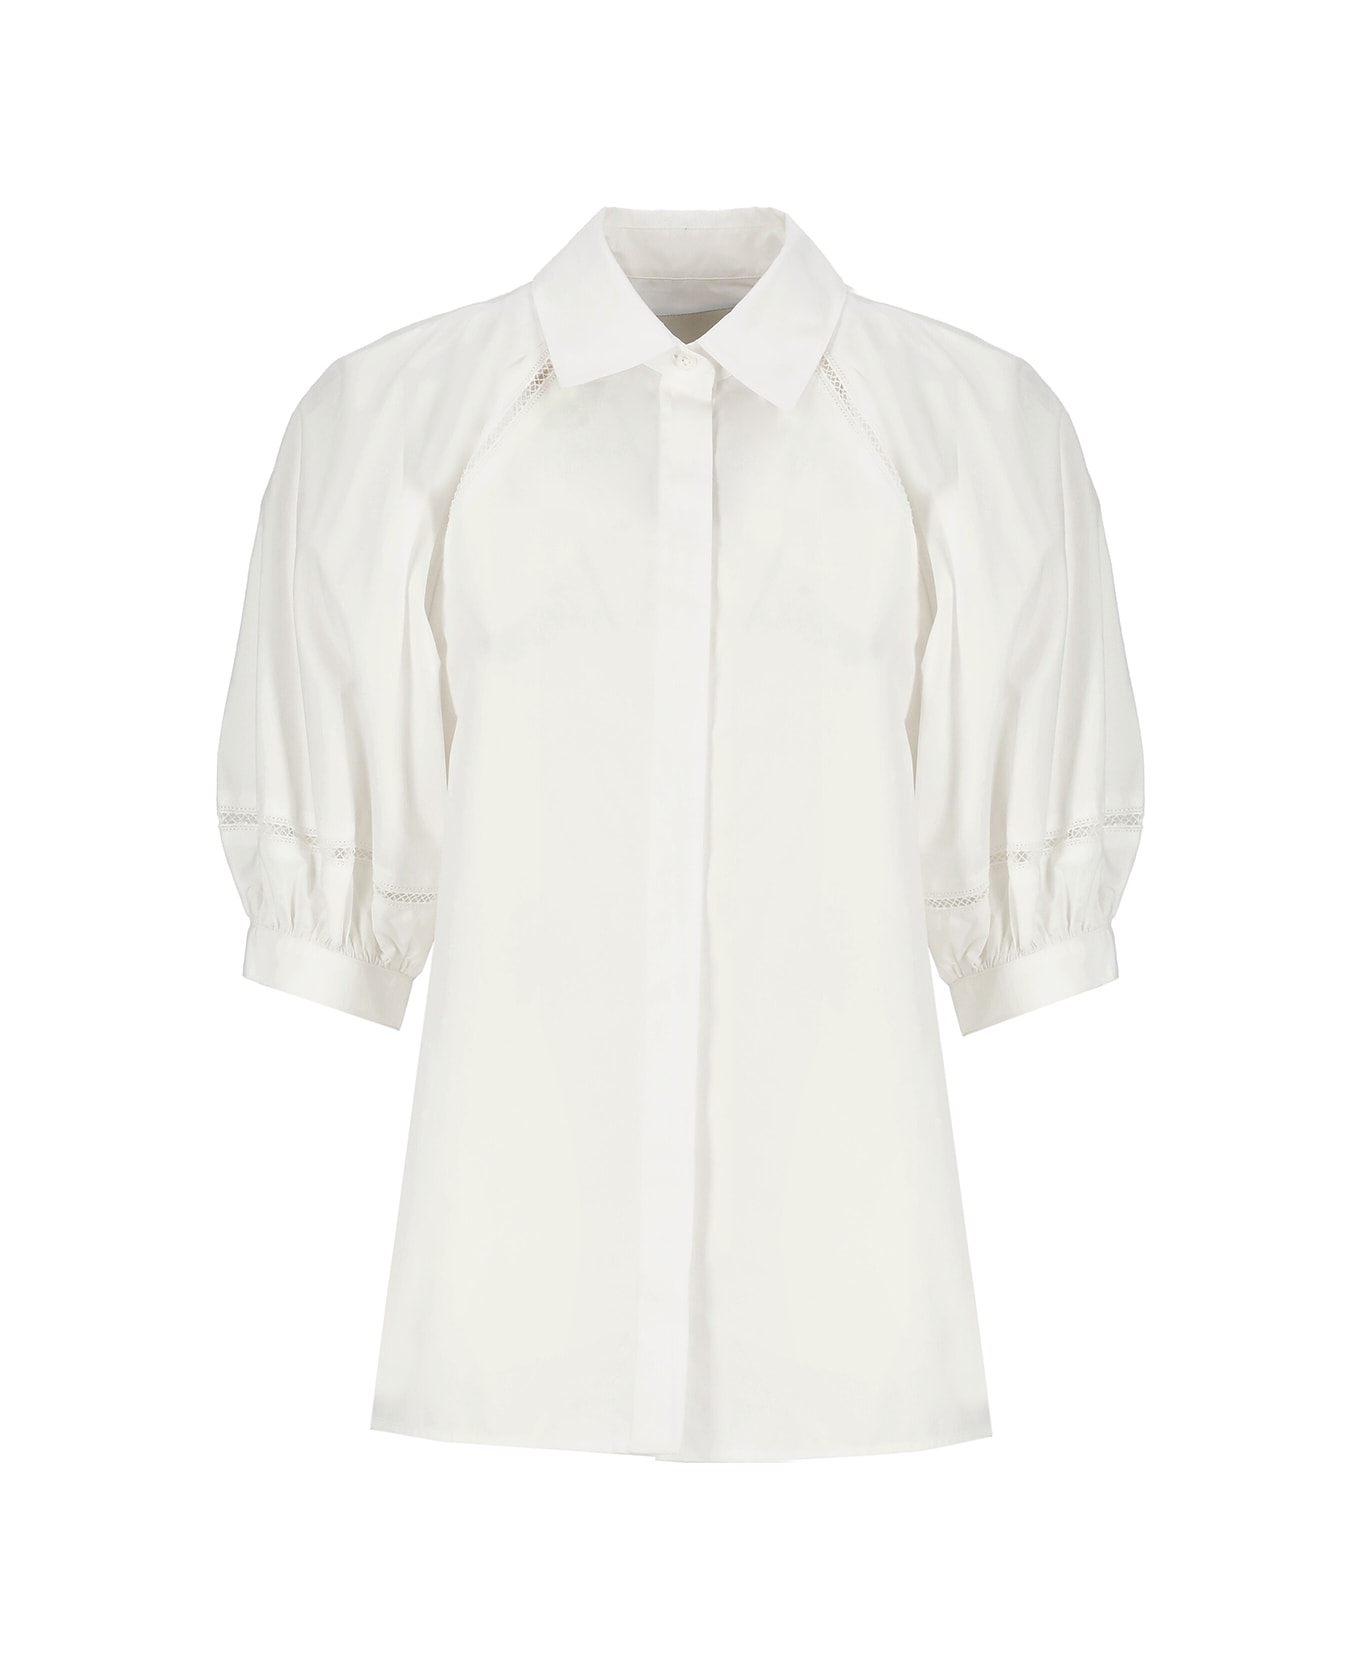 3.1 Phillip Lim Lantern Shirt - White